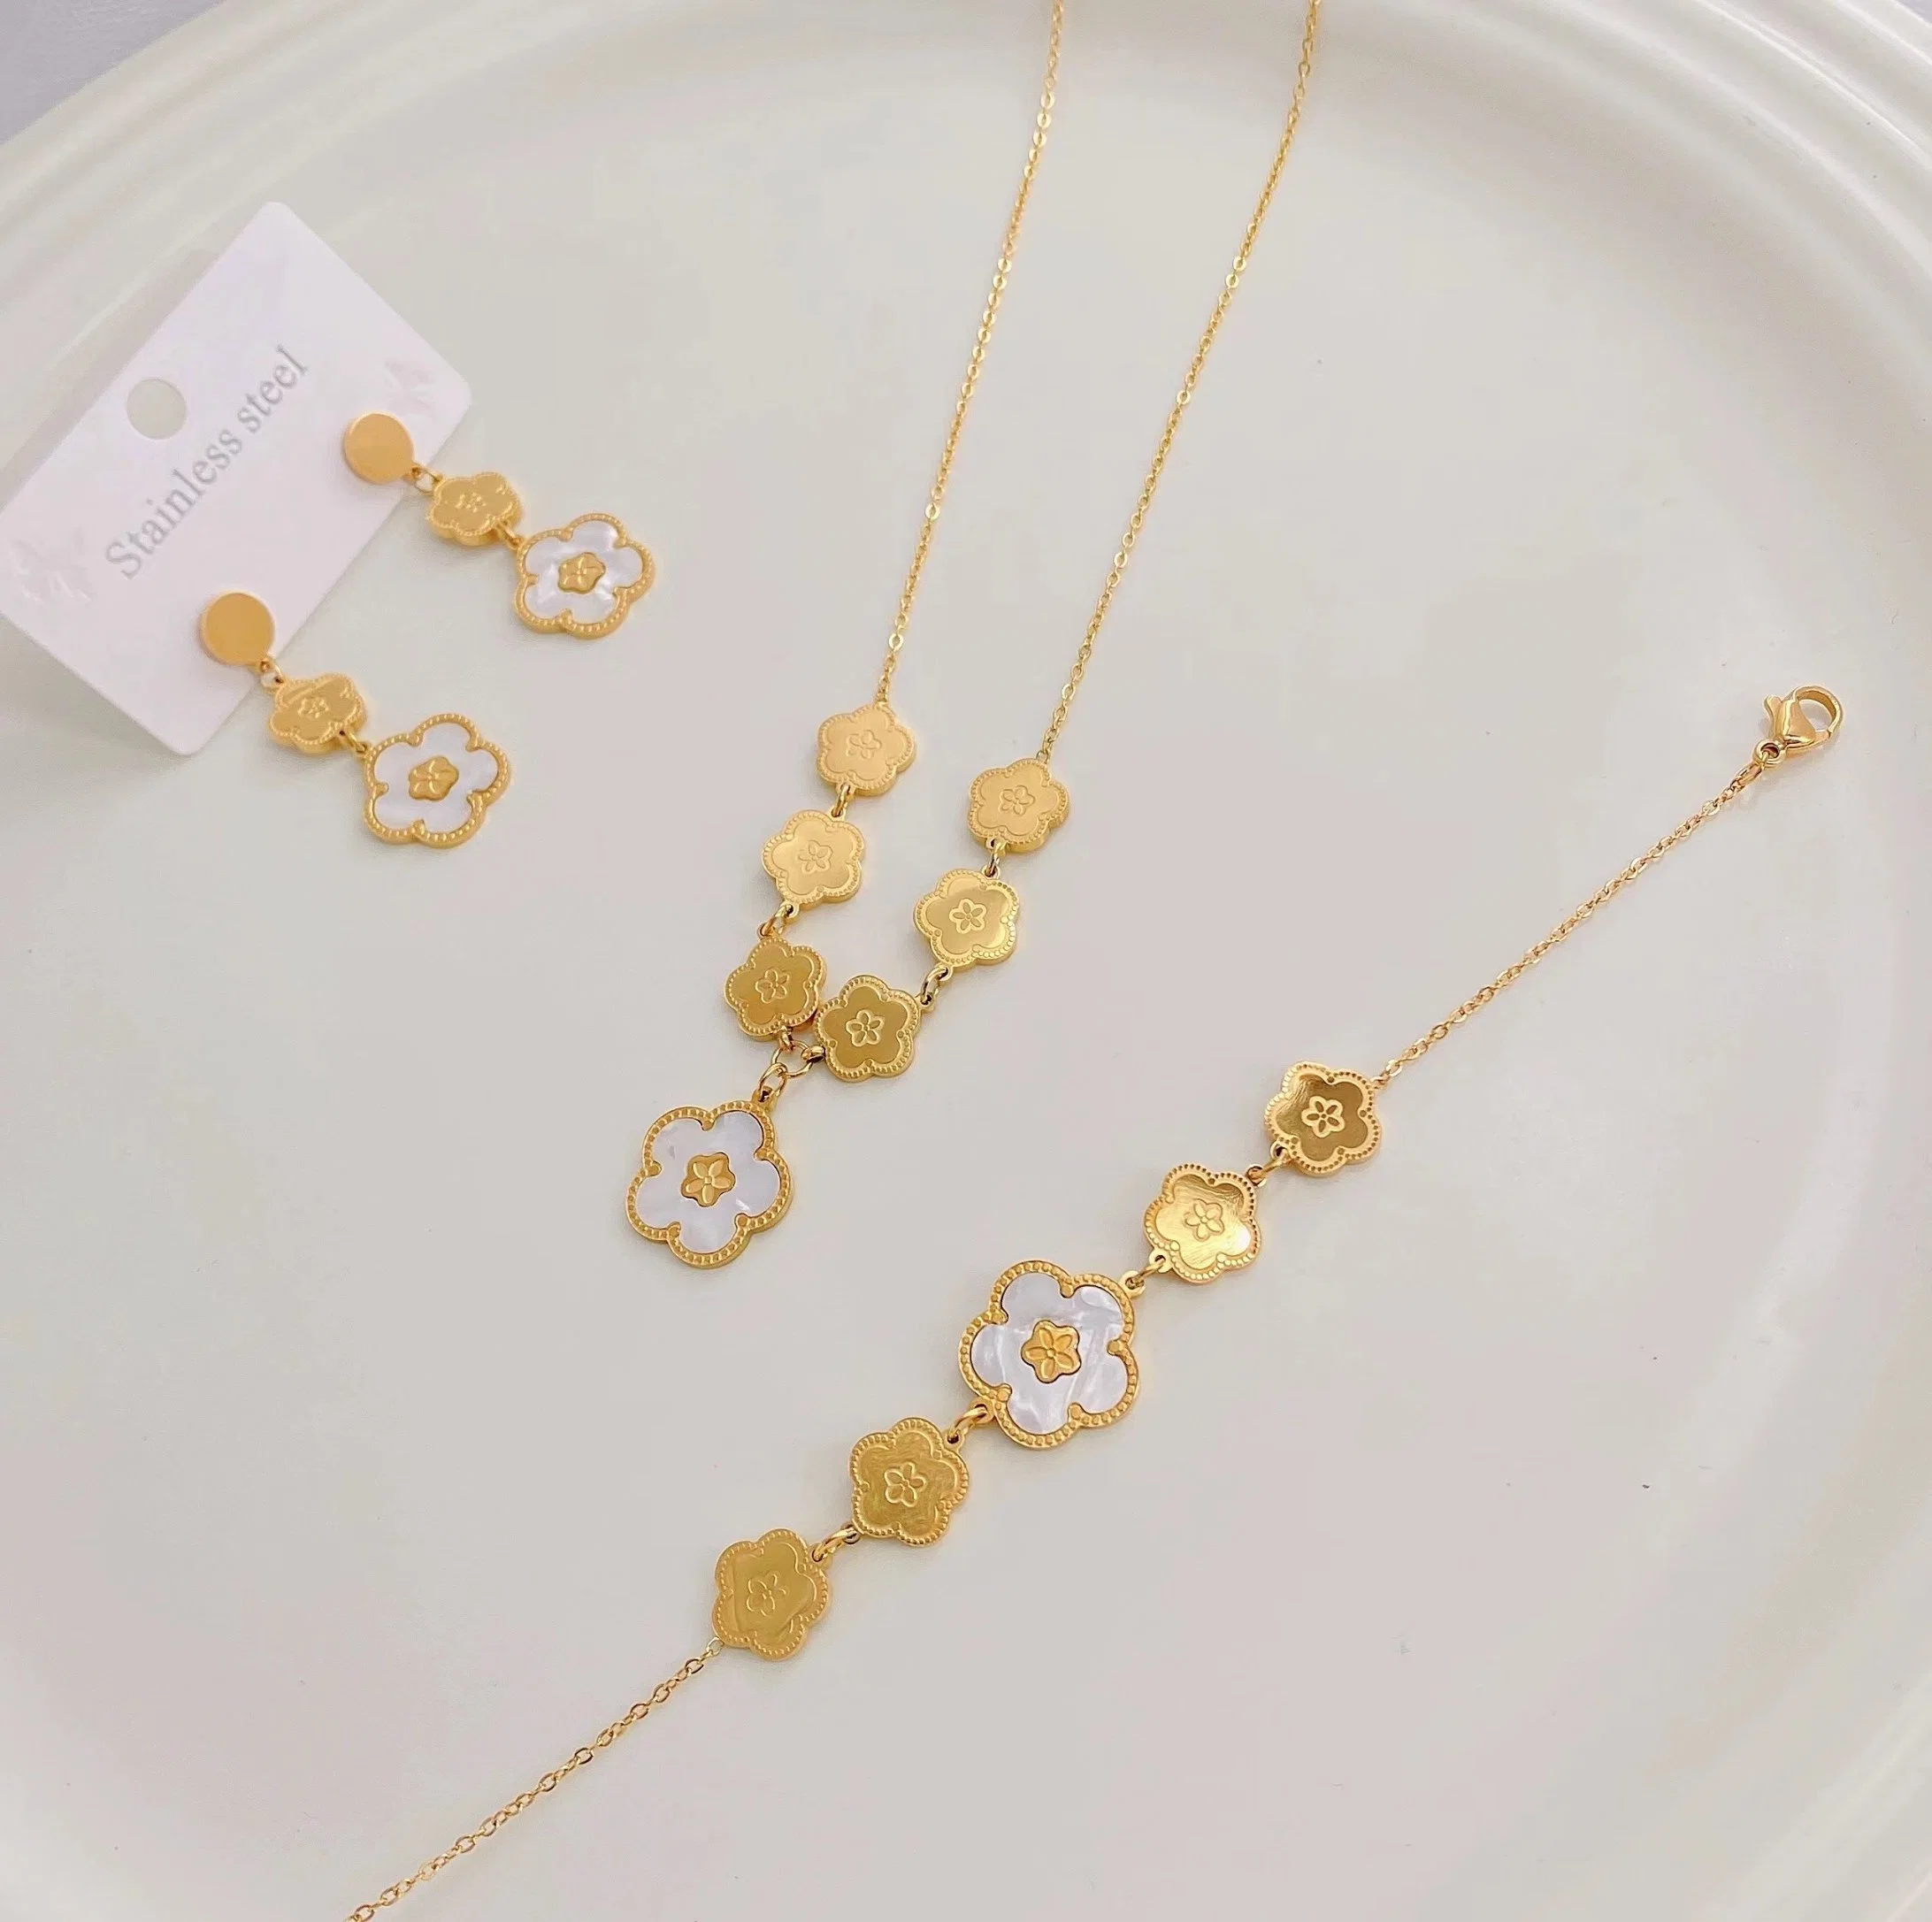 Customized Fashion Flower Pendant Jewelry Necklace Set Lovely Jewelry Set